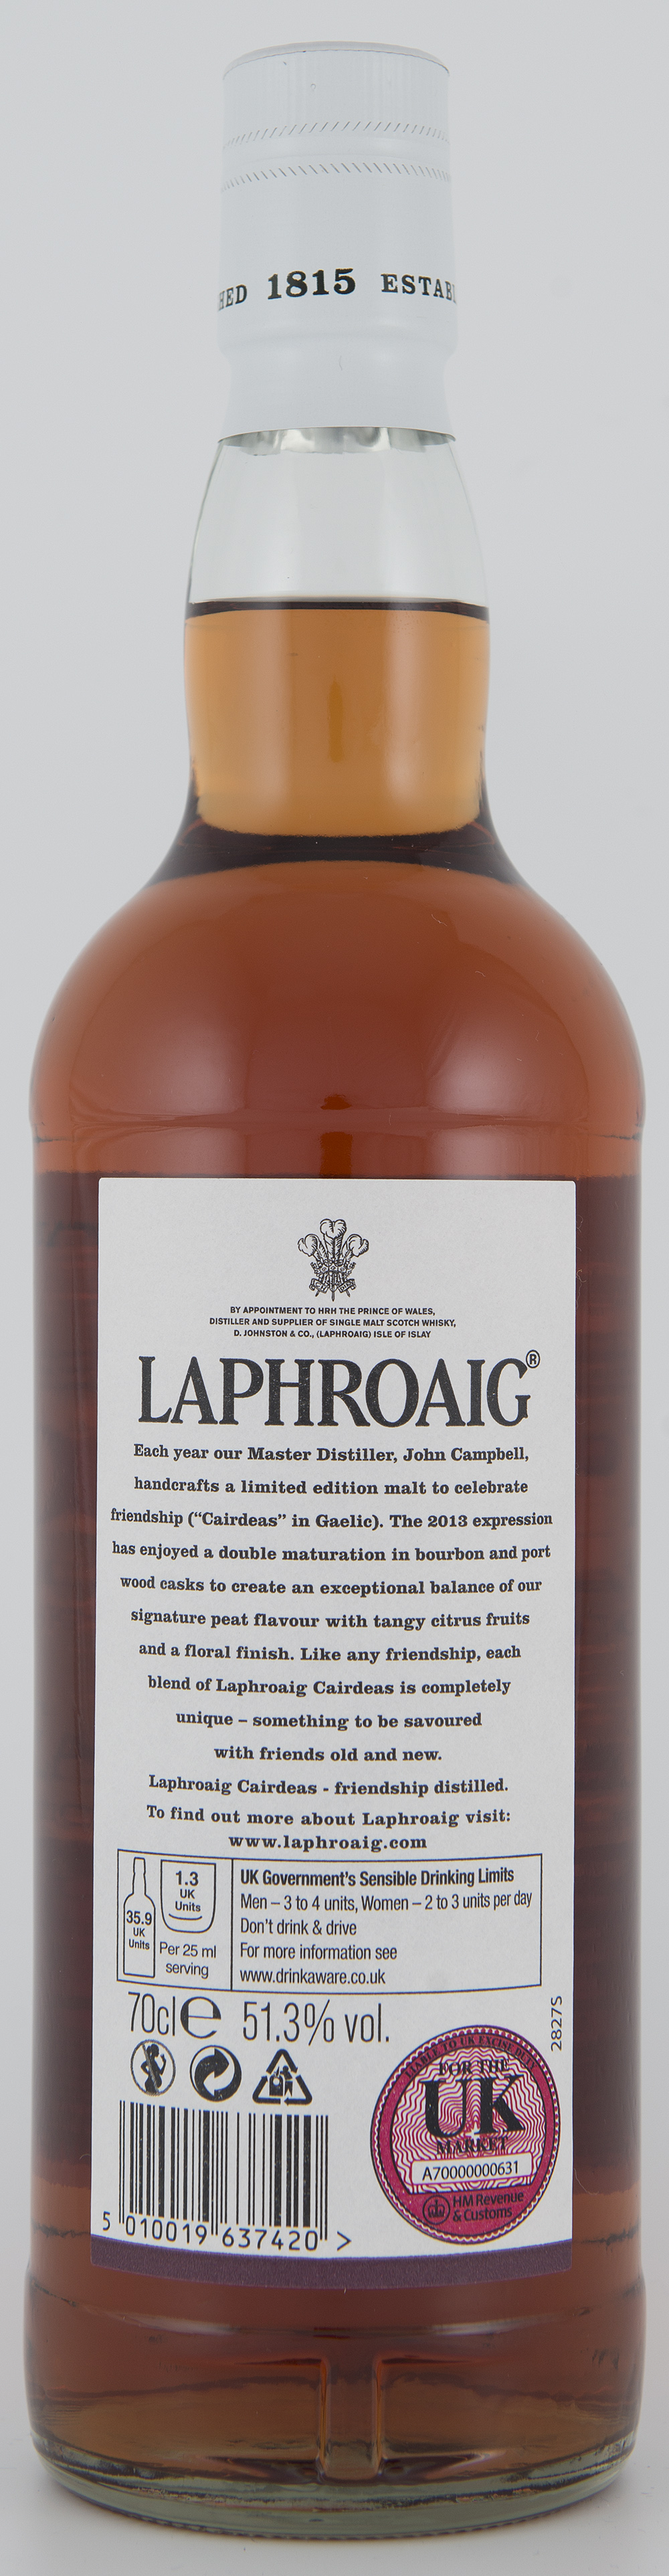 Billede: DSC_3219 Laphroaig Cairdeas Port Wood Edition (Feis Isle 2013) - bottle back.jpg